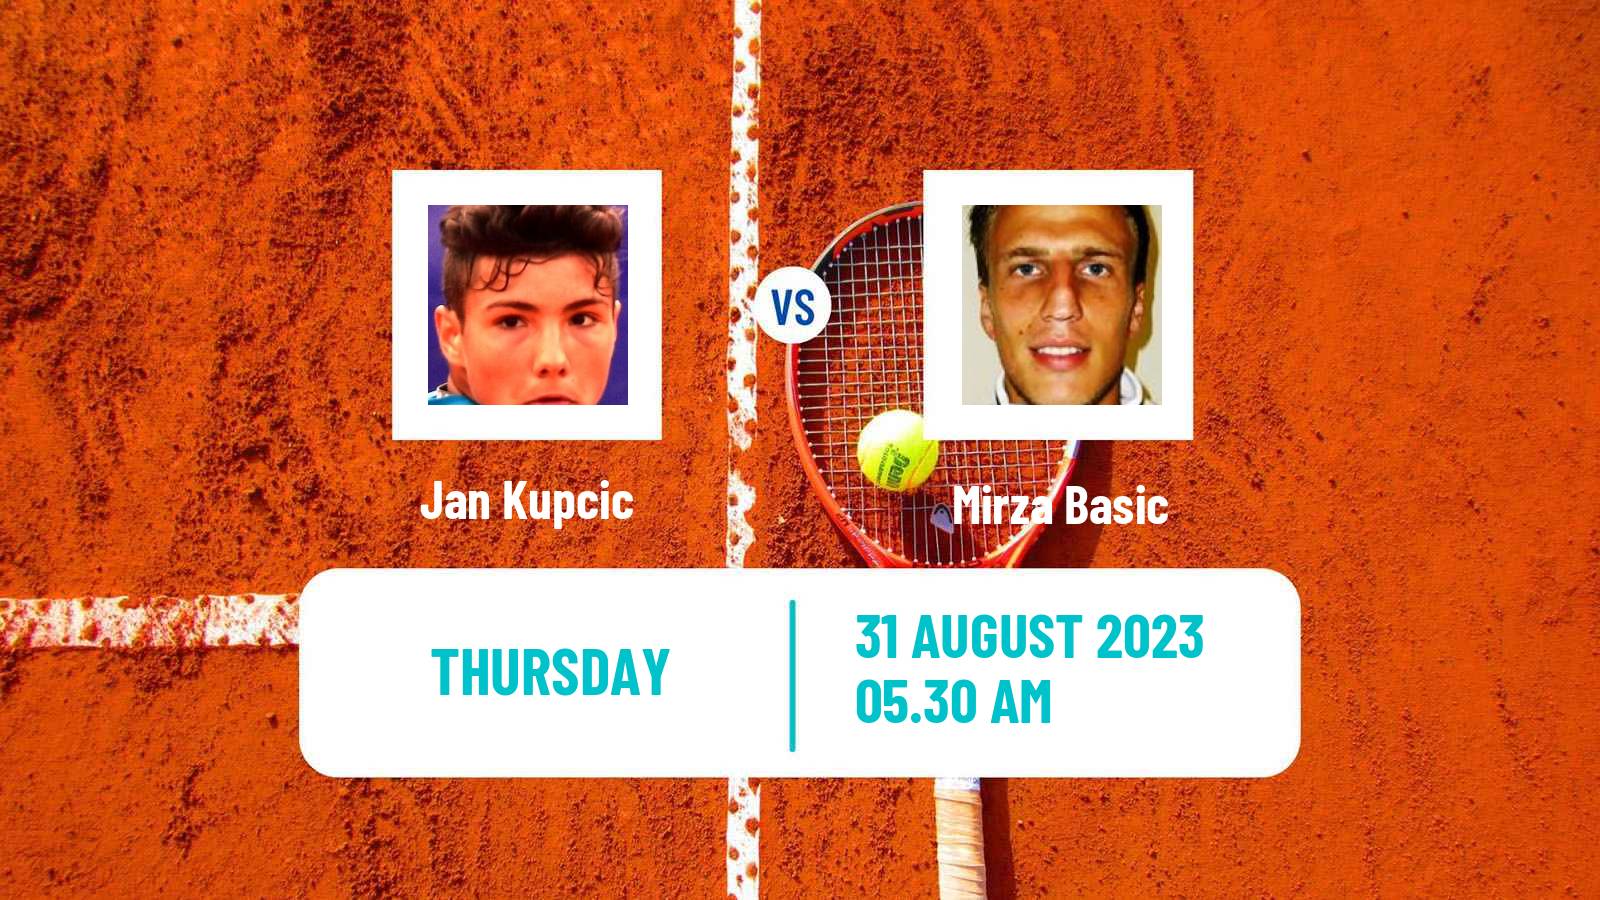 Tennis ITF M25 MarIBOr Men 2023 Jan Kupcic - Mirza Basic